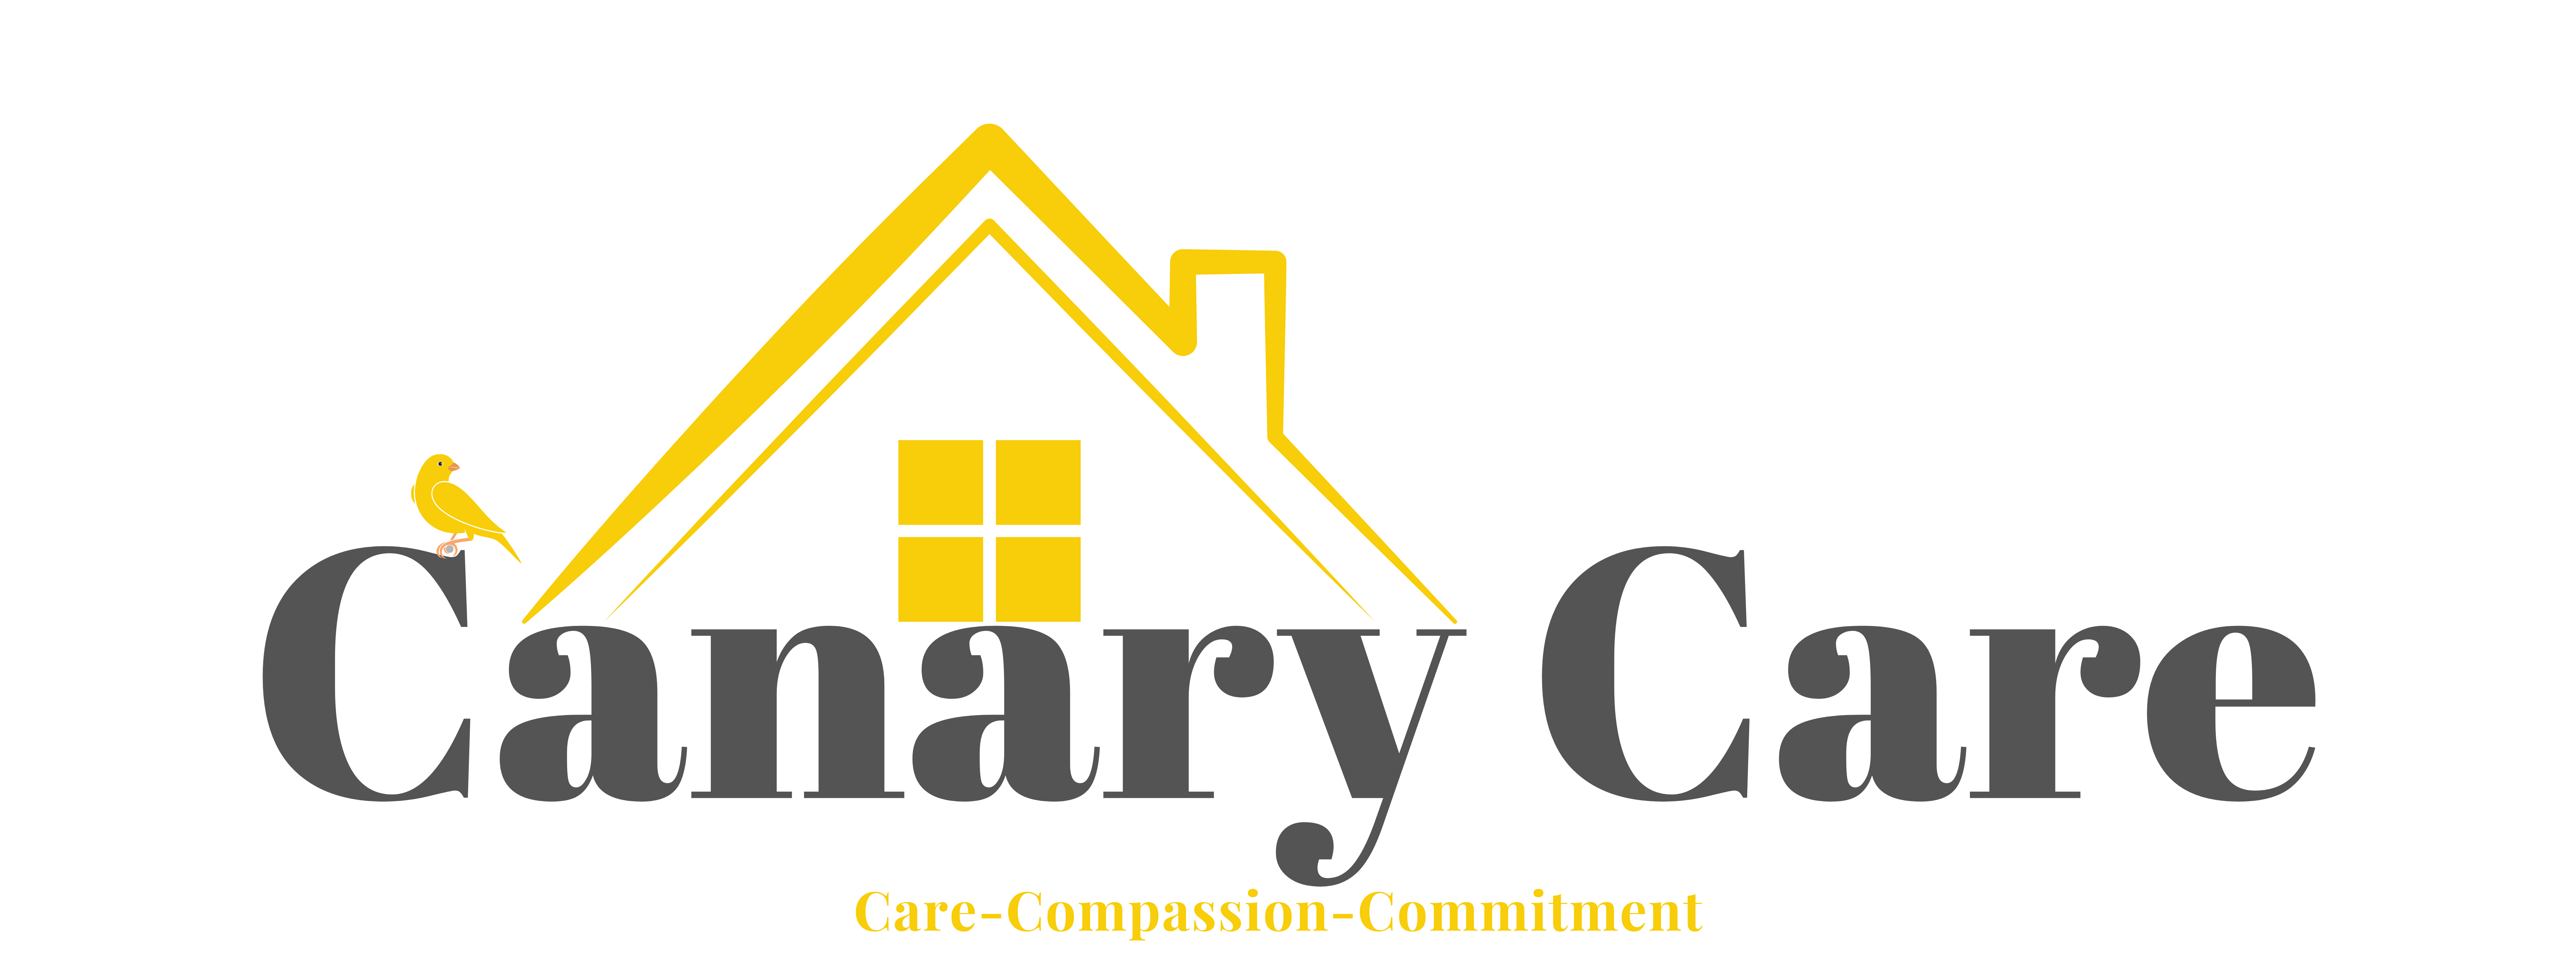 www.canarycare.org.uk